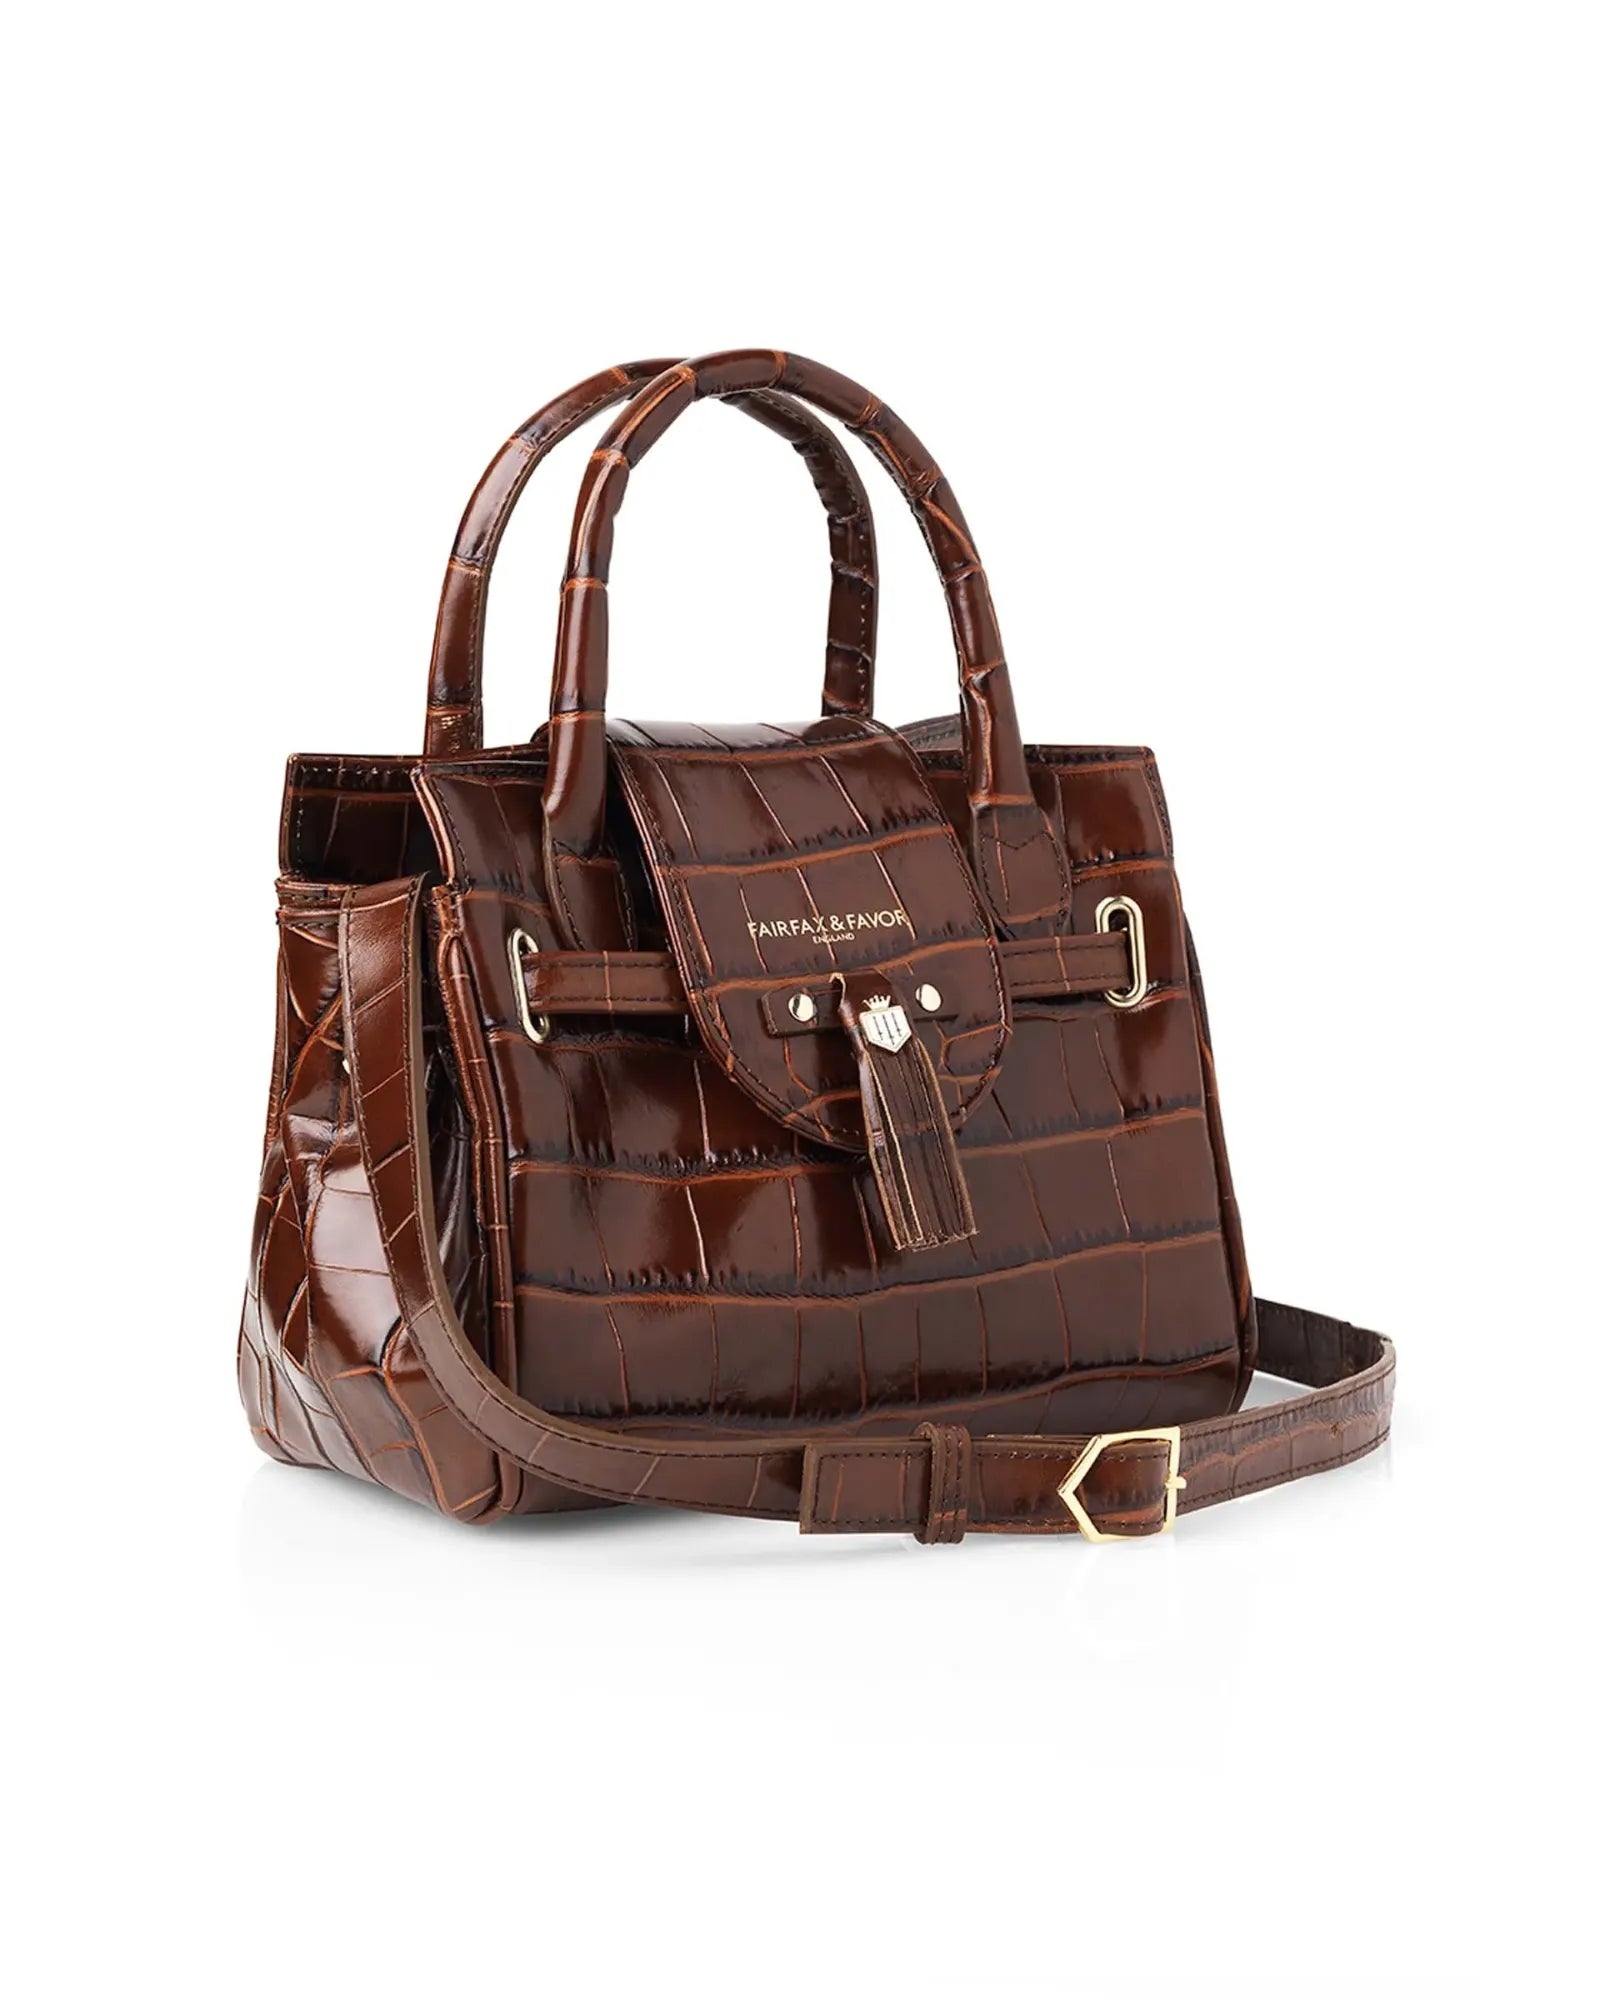 The Mini Windsor Handbag in Conker Leather